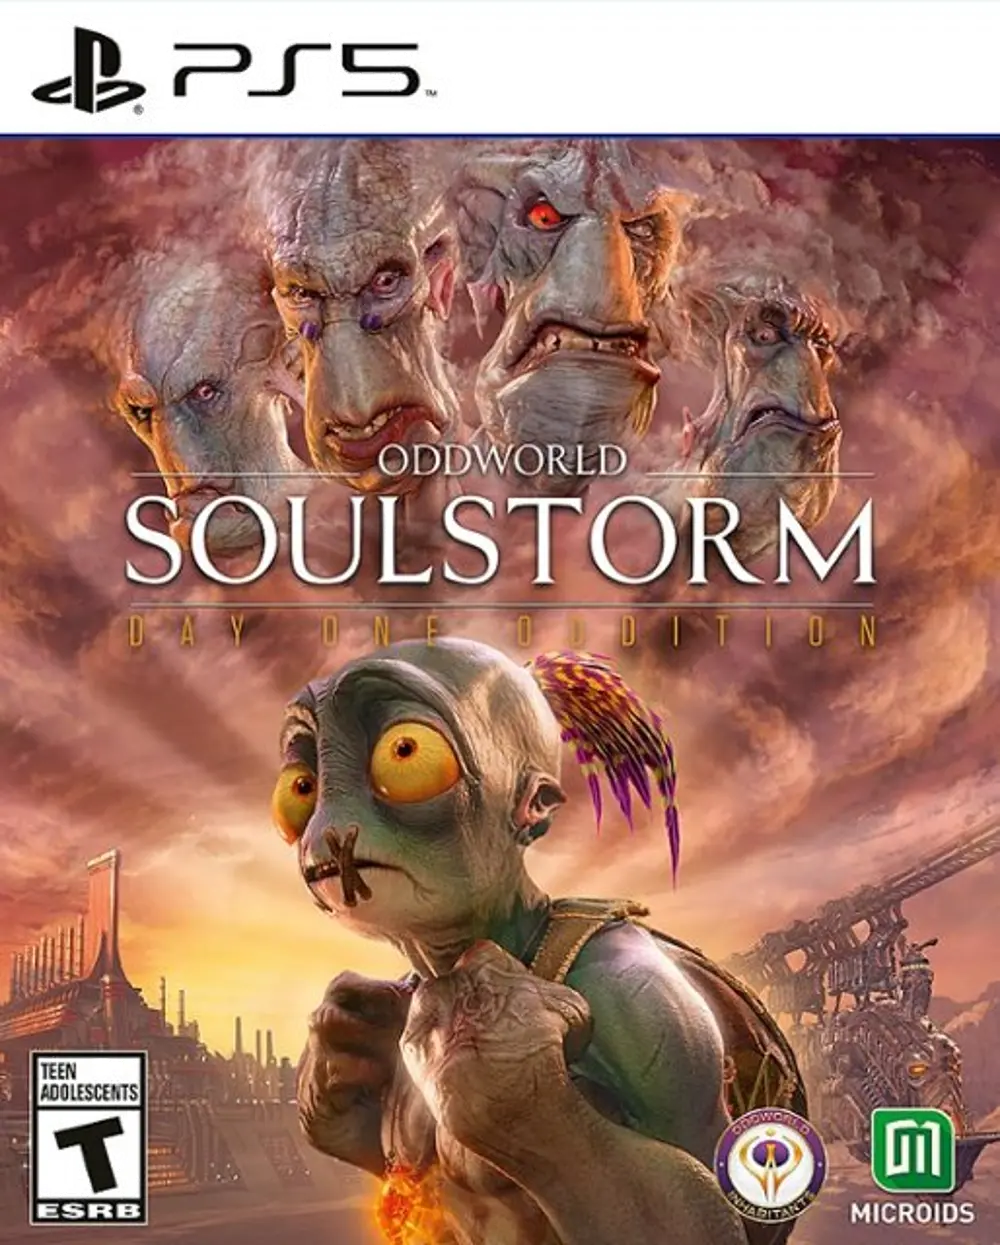 PS5/ODDWORLD:SLSTRM Oddworld: Soulstorm Day One - PlayStaion 5-1